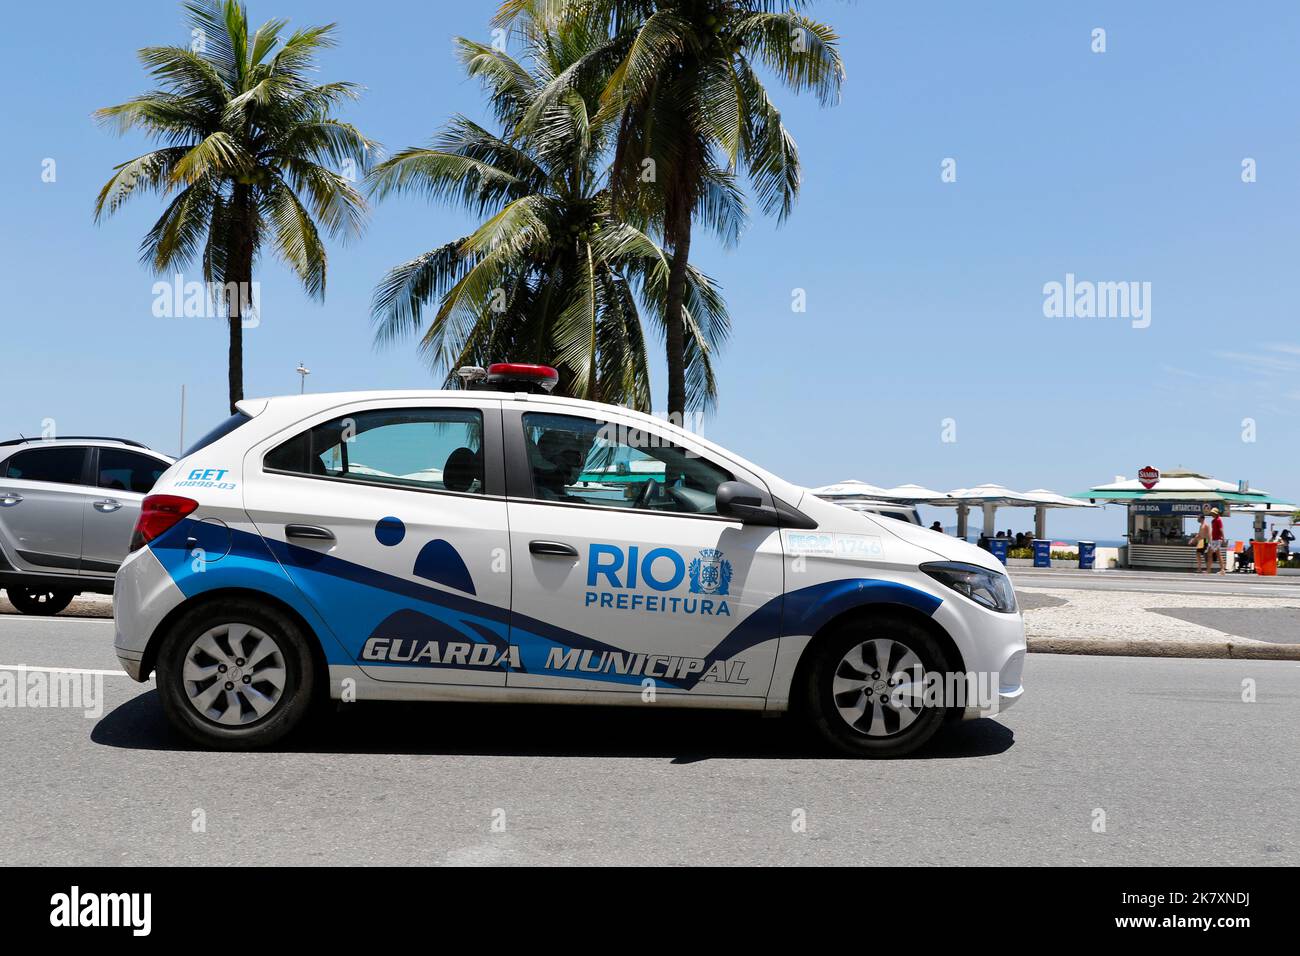 Police car vehicle of Rio de Janeiro Guarda Municipal squad patrolling street, traffic violations law enforcement Stock Photo